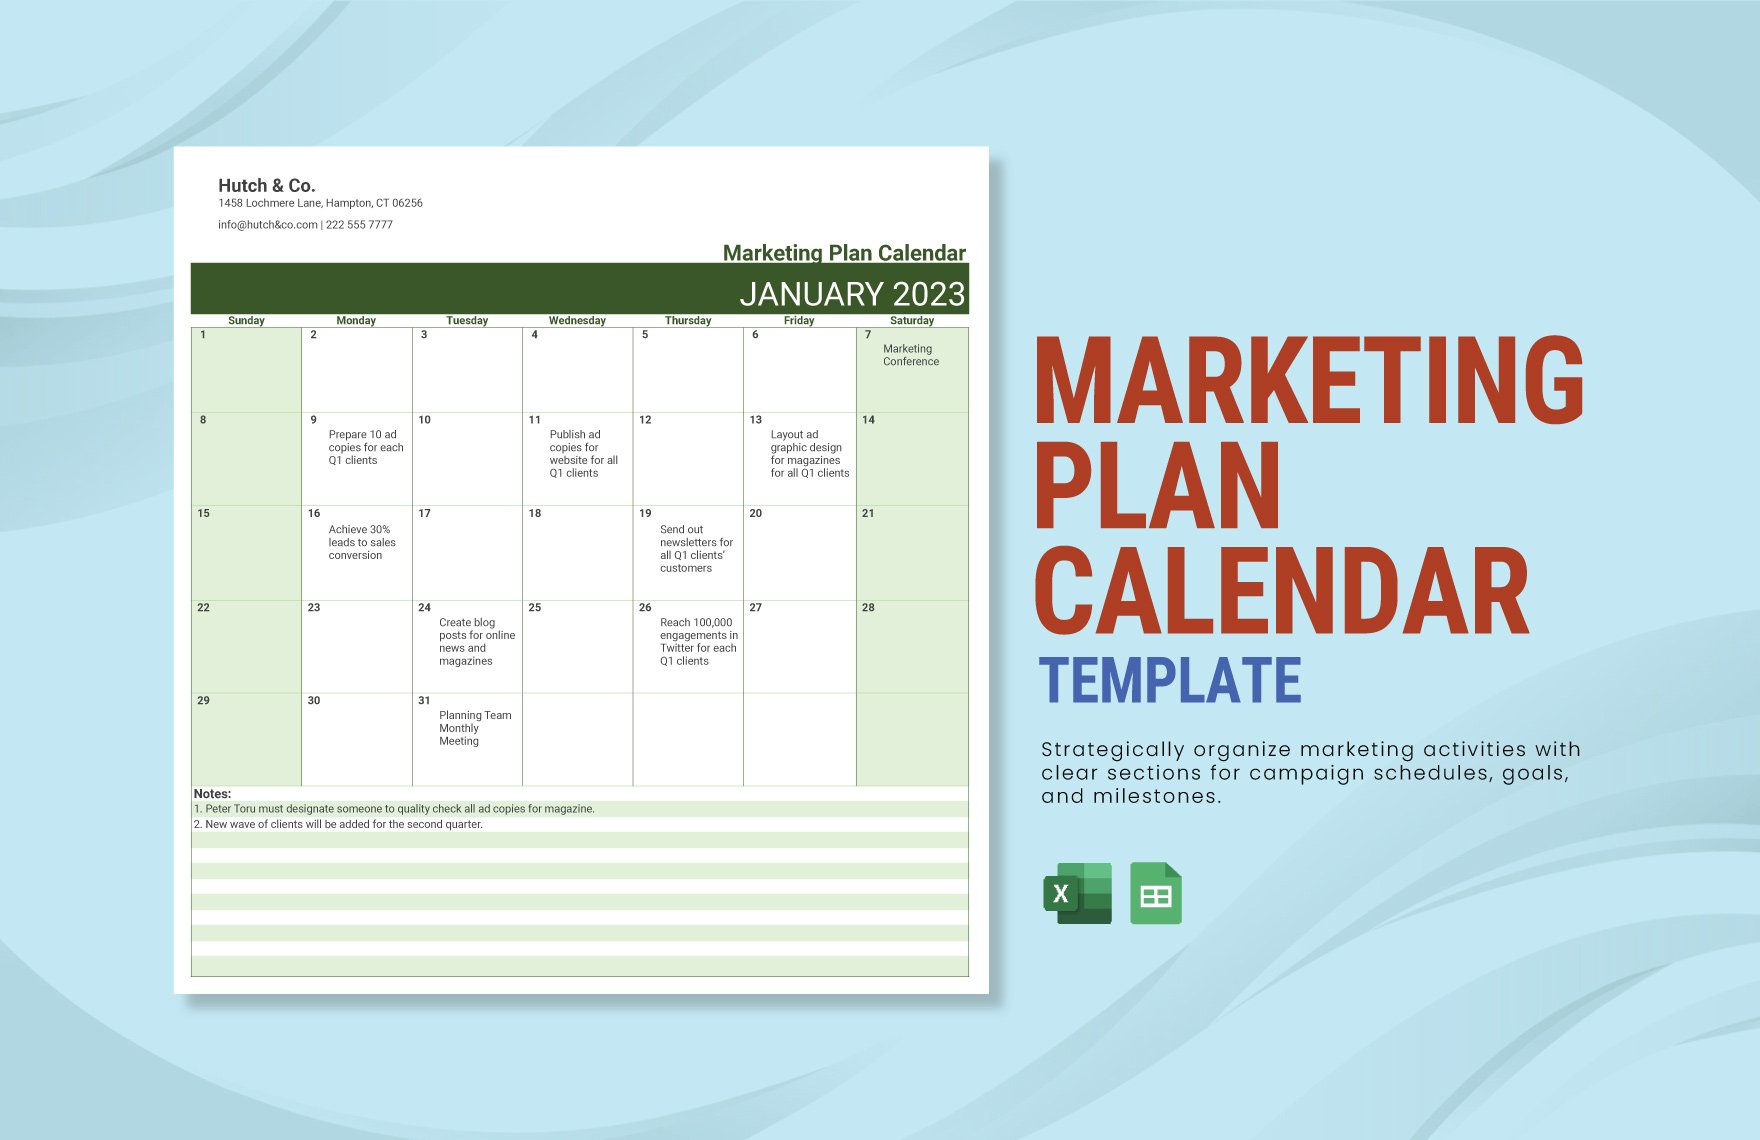 Marketing Plan Calendar Template in Excel, Google Sheets